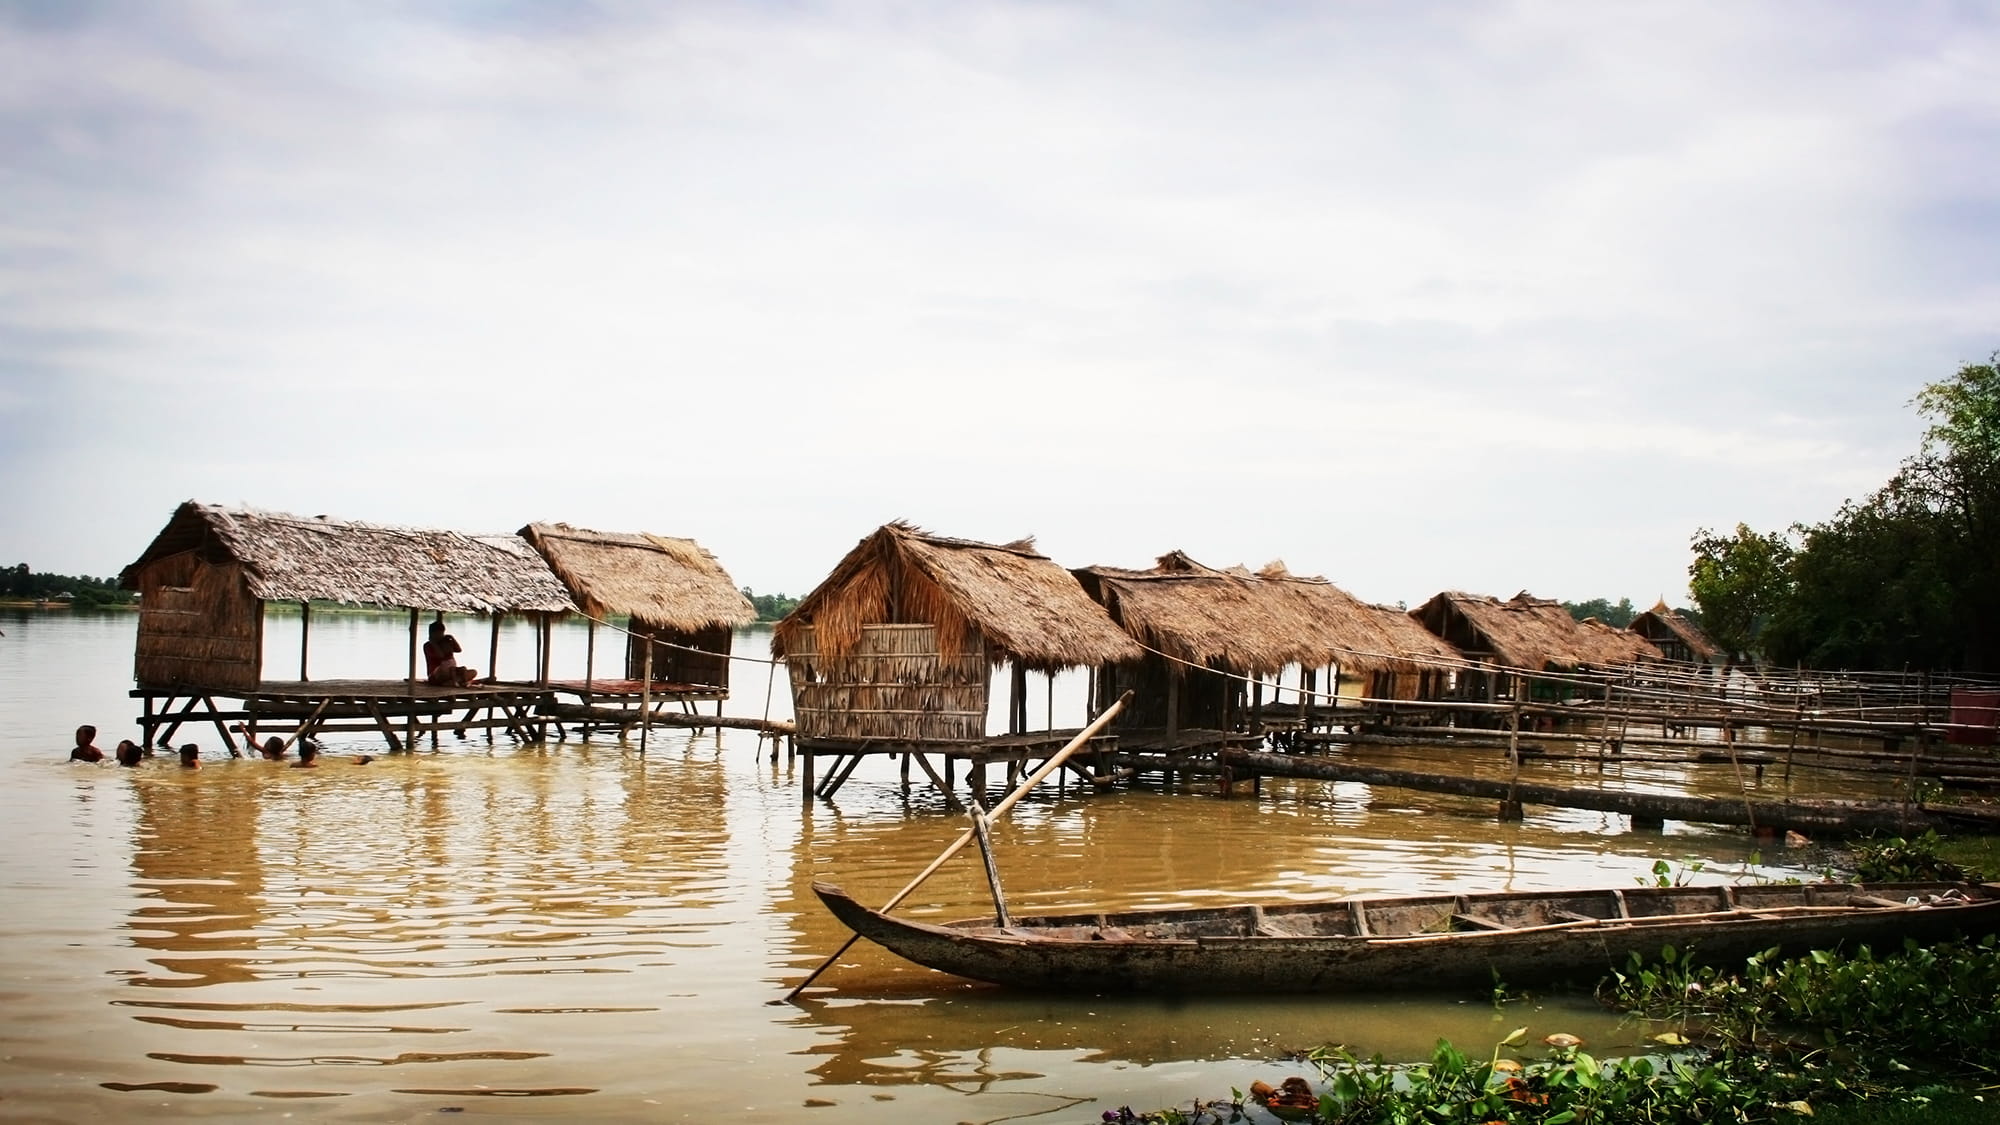 Houseboats on the Tonle sap lake, Cambodia